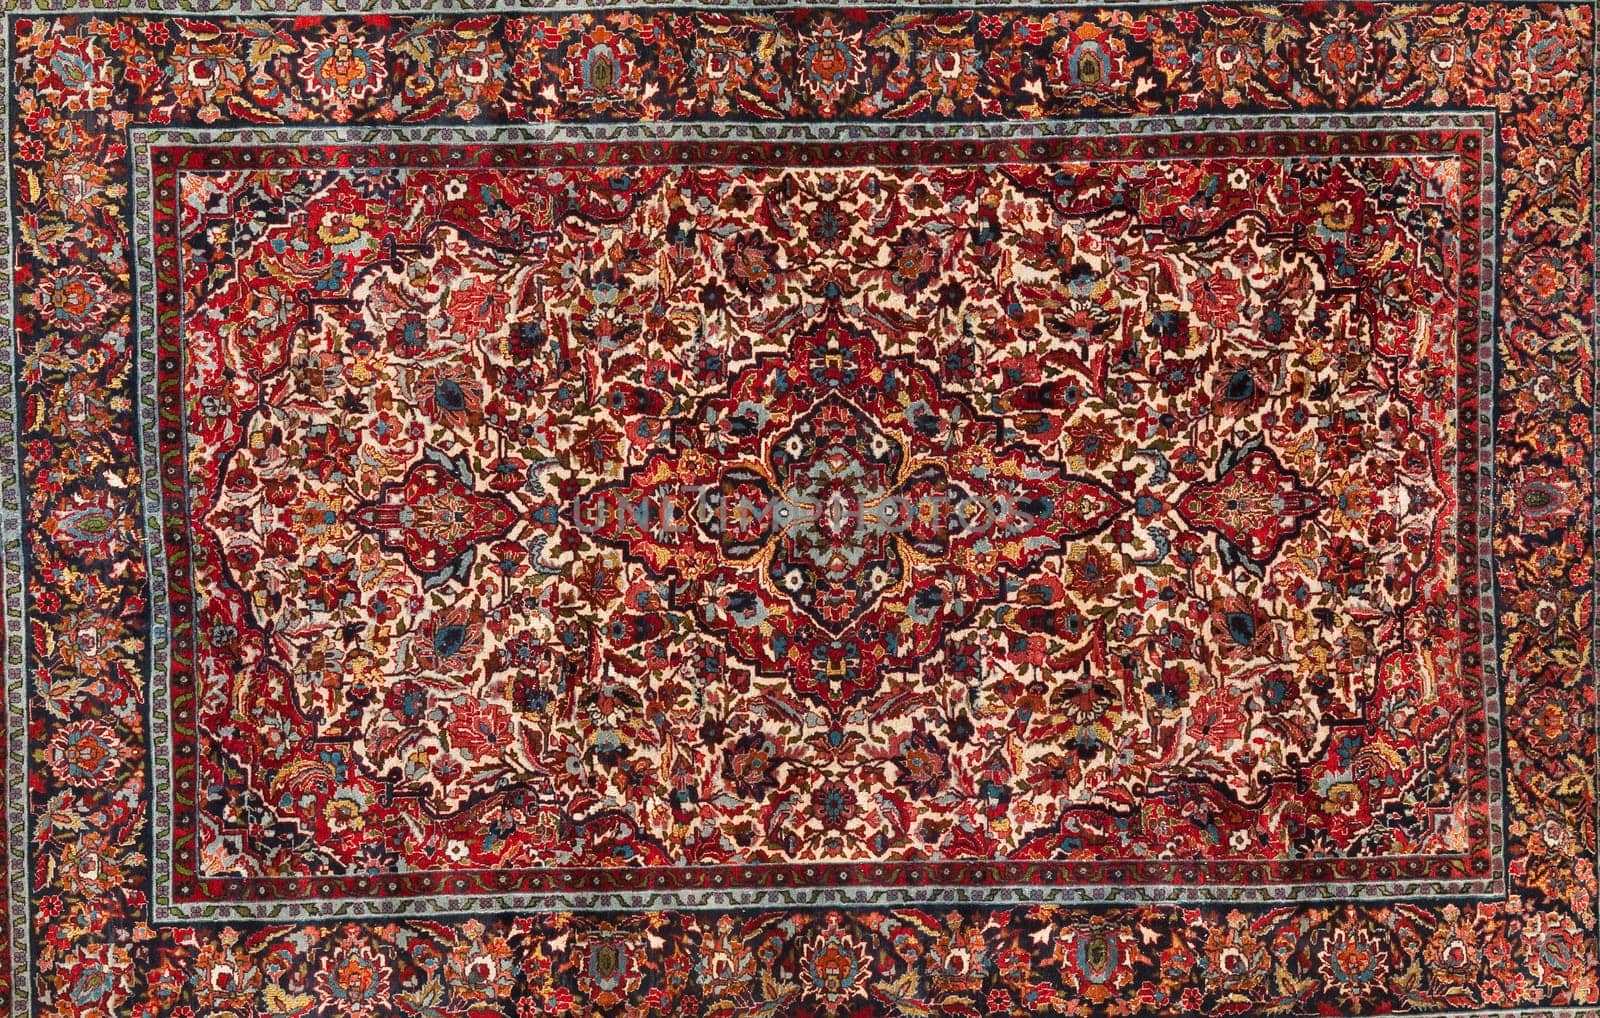 Turkish Carpet by emirkoo